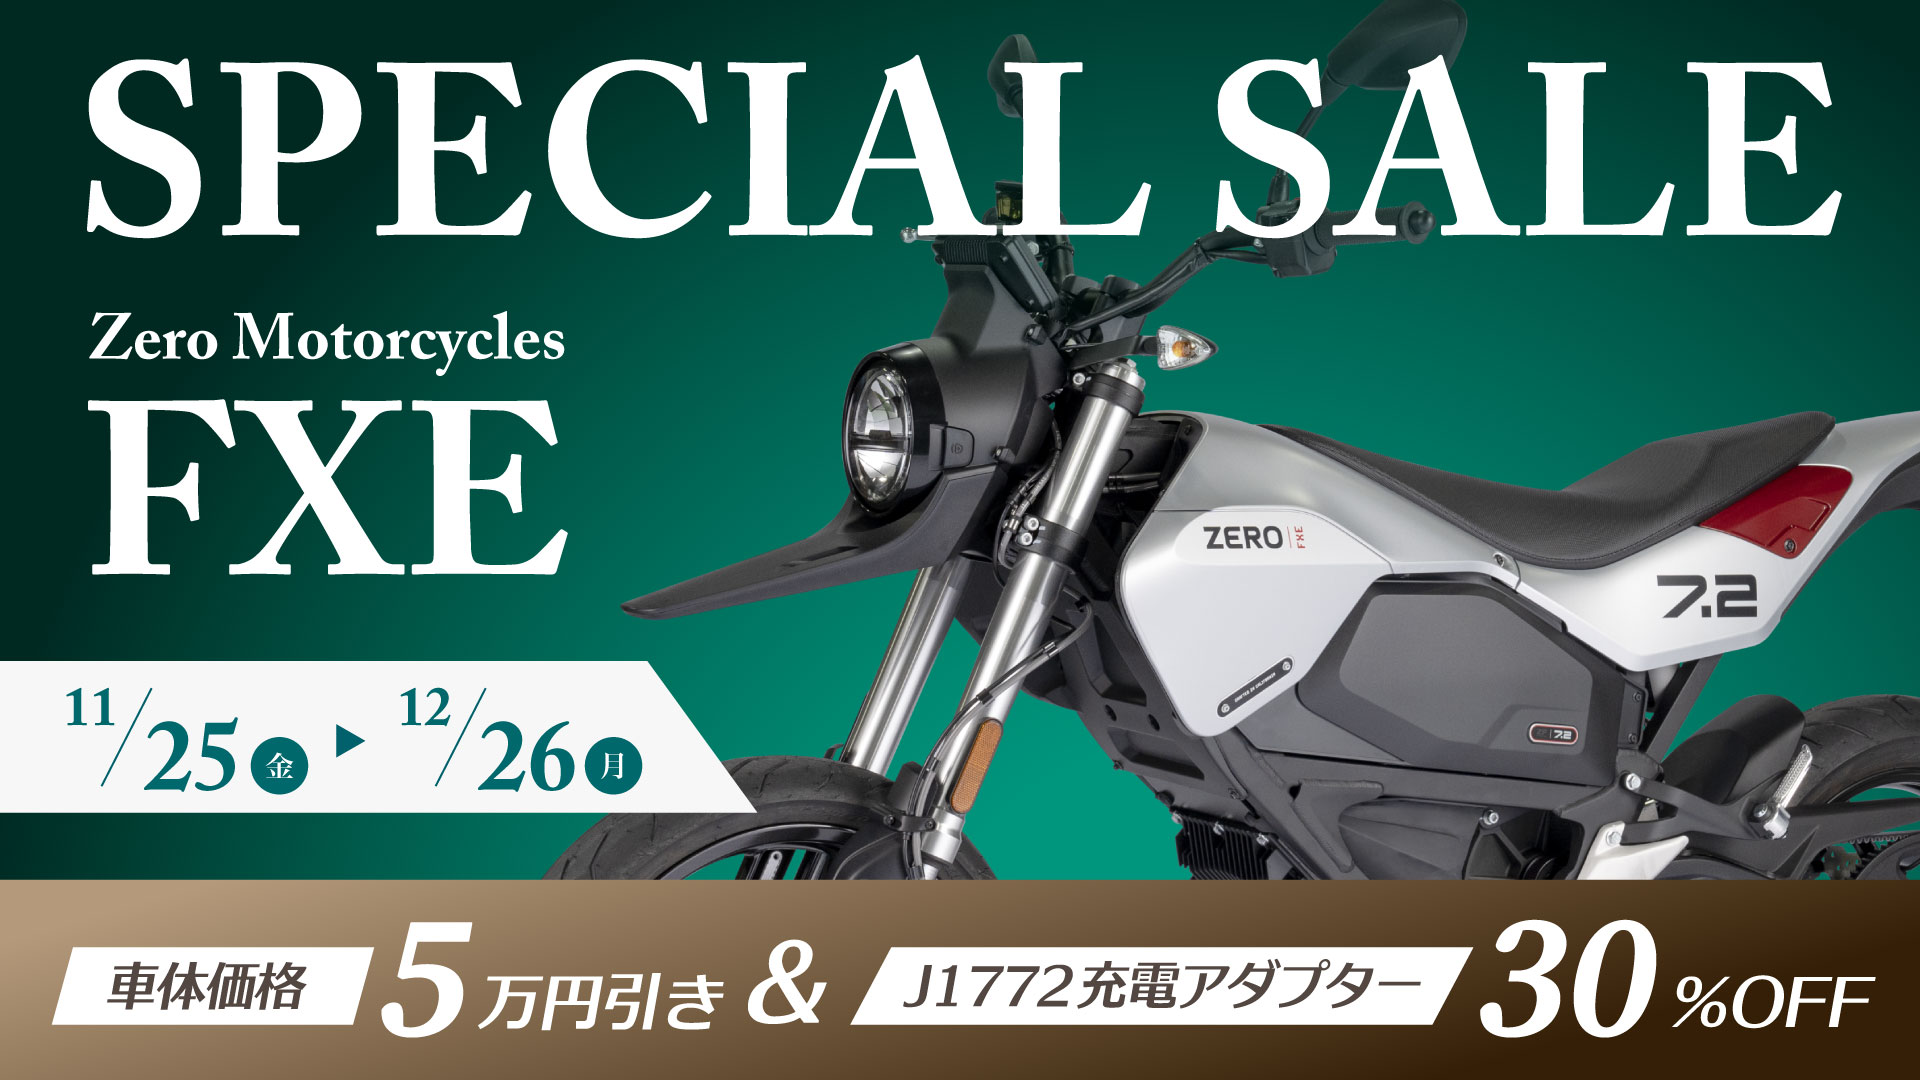 Zero Motorcycles FXE SPECIAL SALE